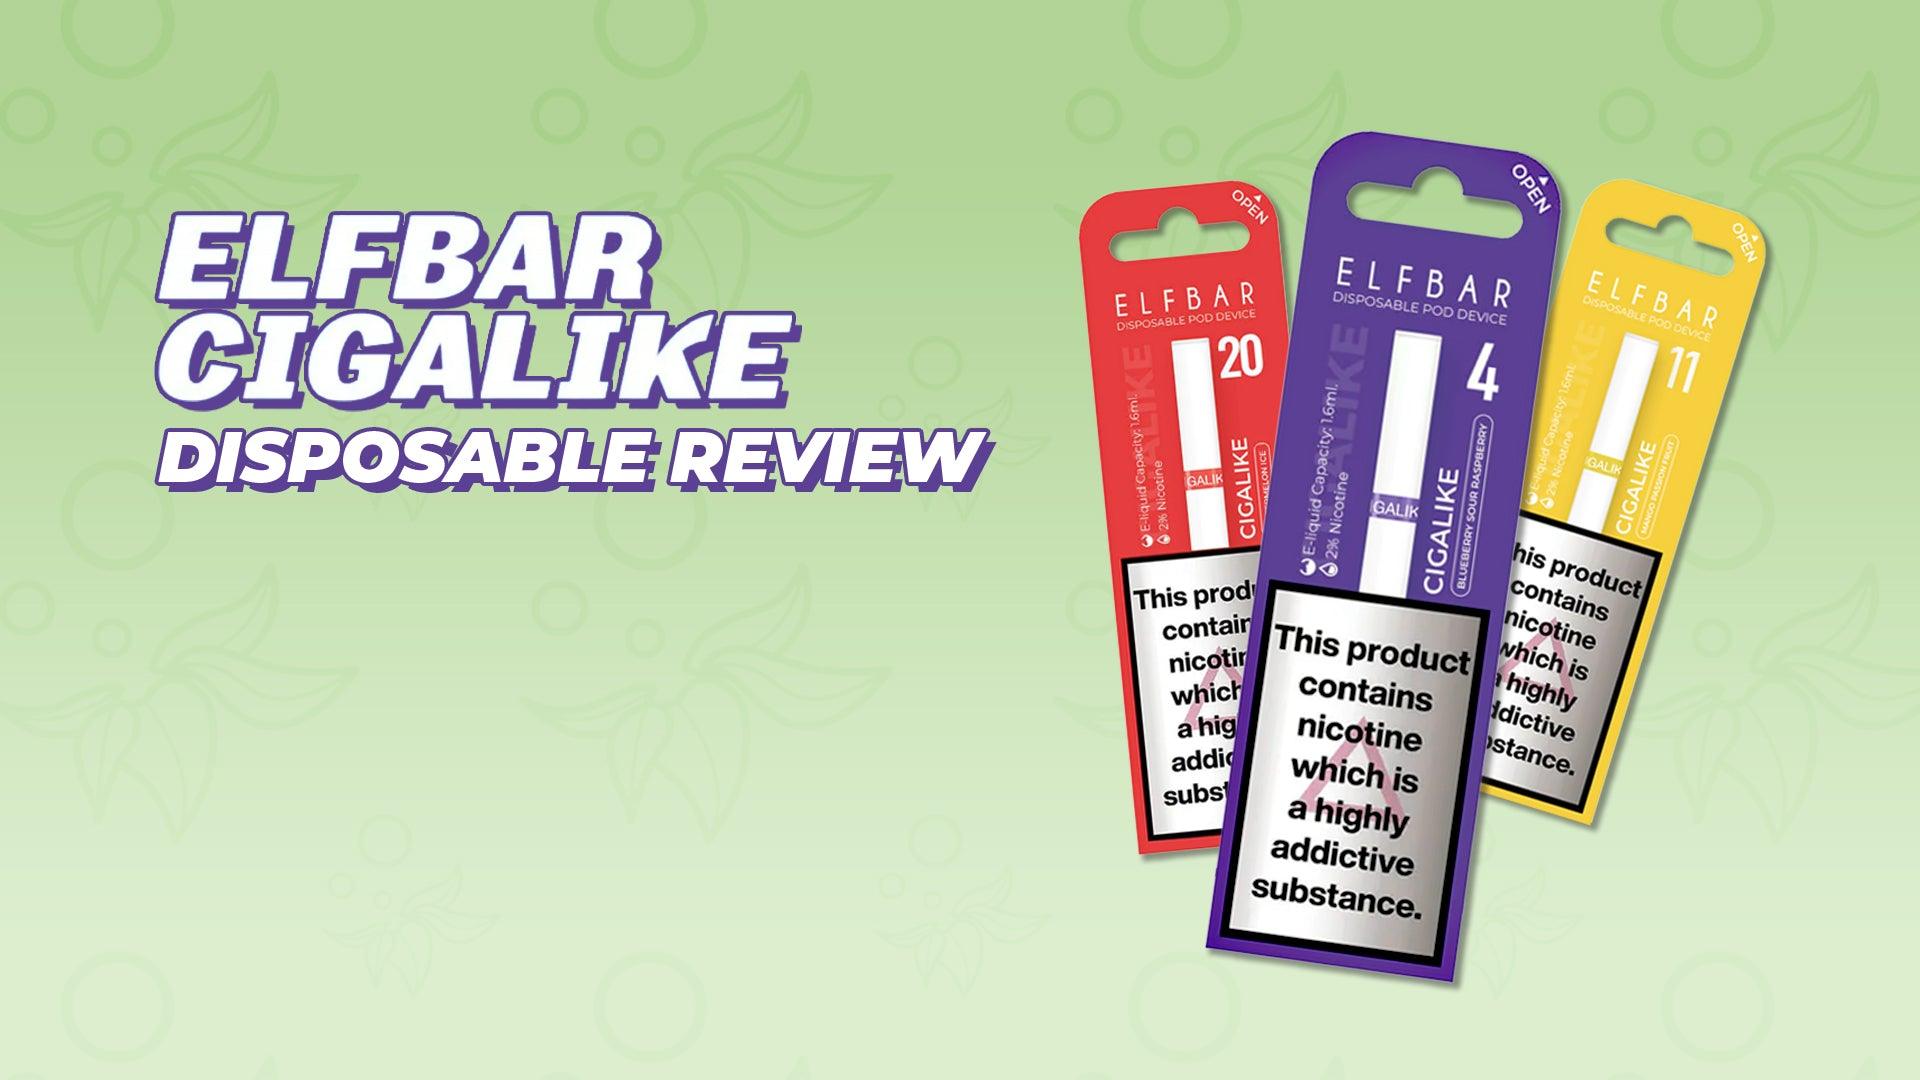 Elf Bar Cigalike Review - Brand:Elf Bar, Category:Vape Kits, Sub Category:Disposables